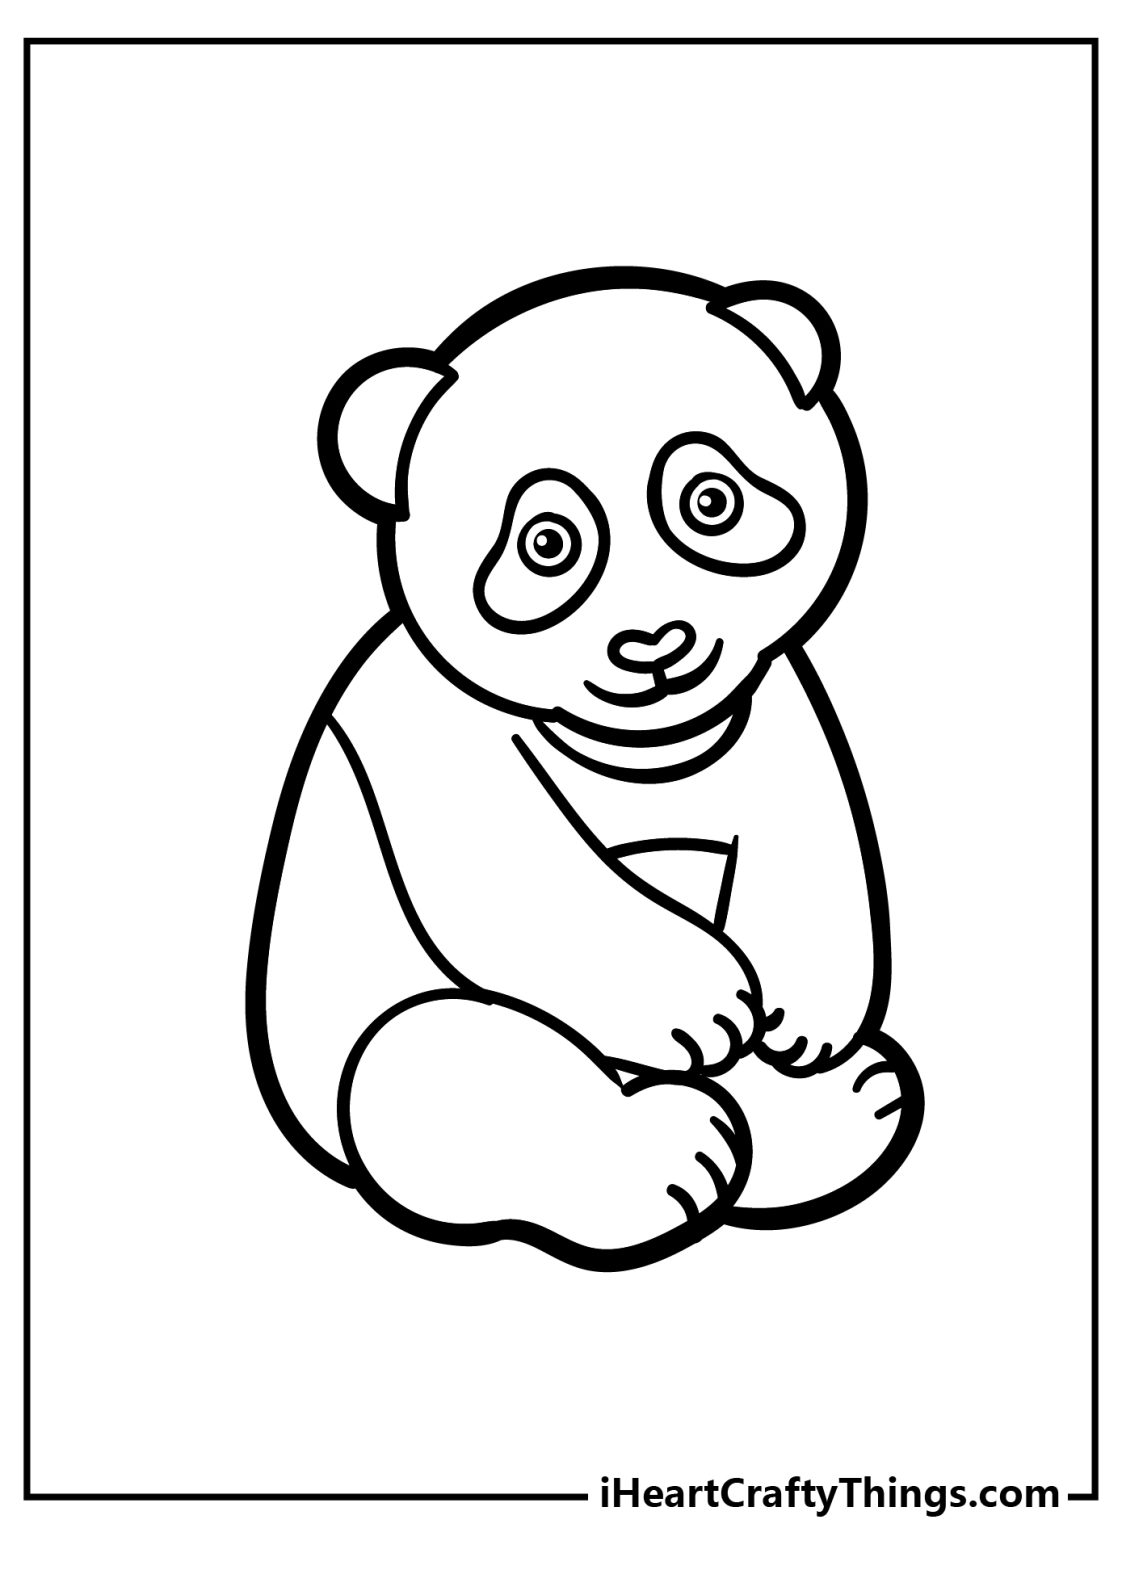 Panda Coloring Pages (100% Free Printables)